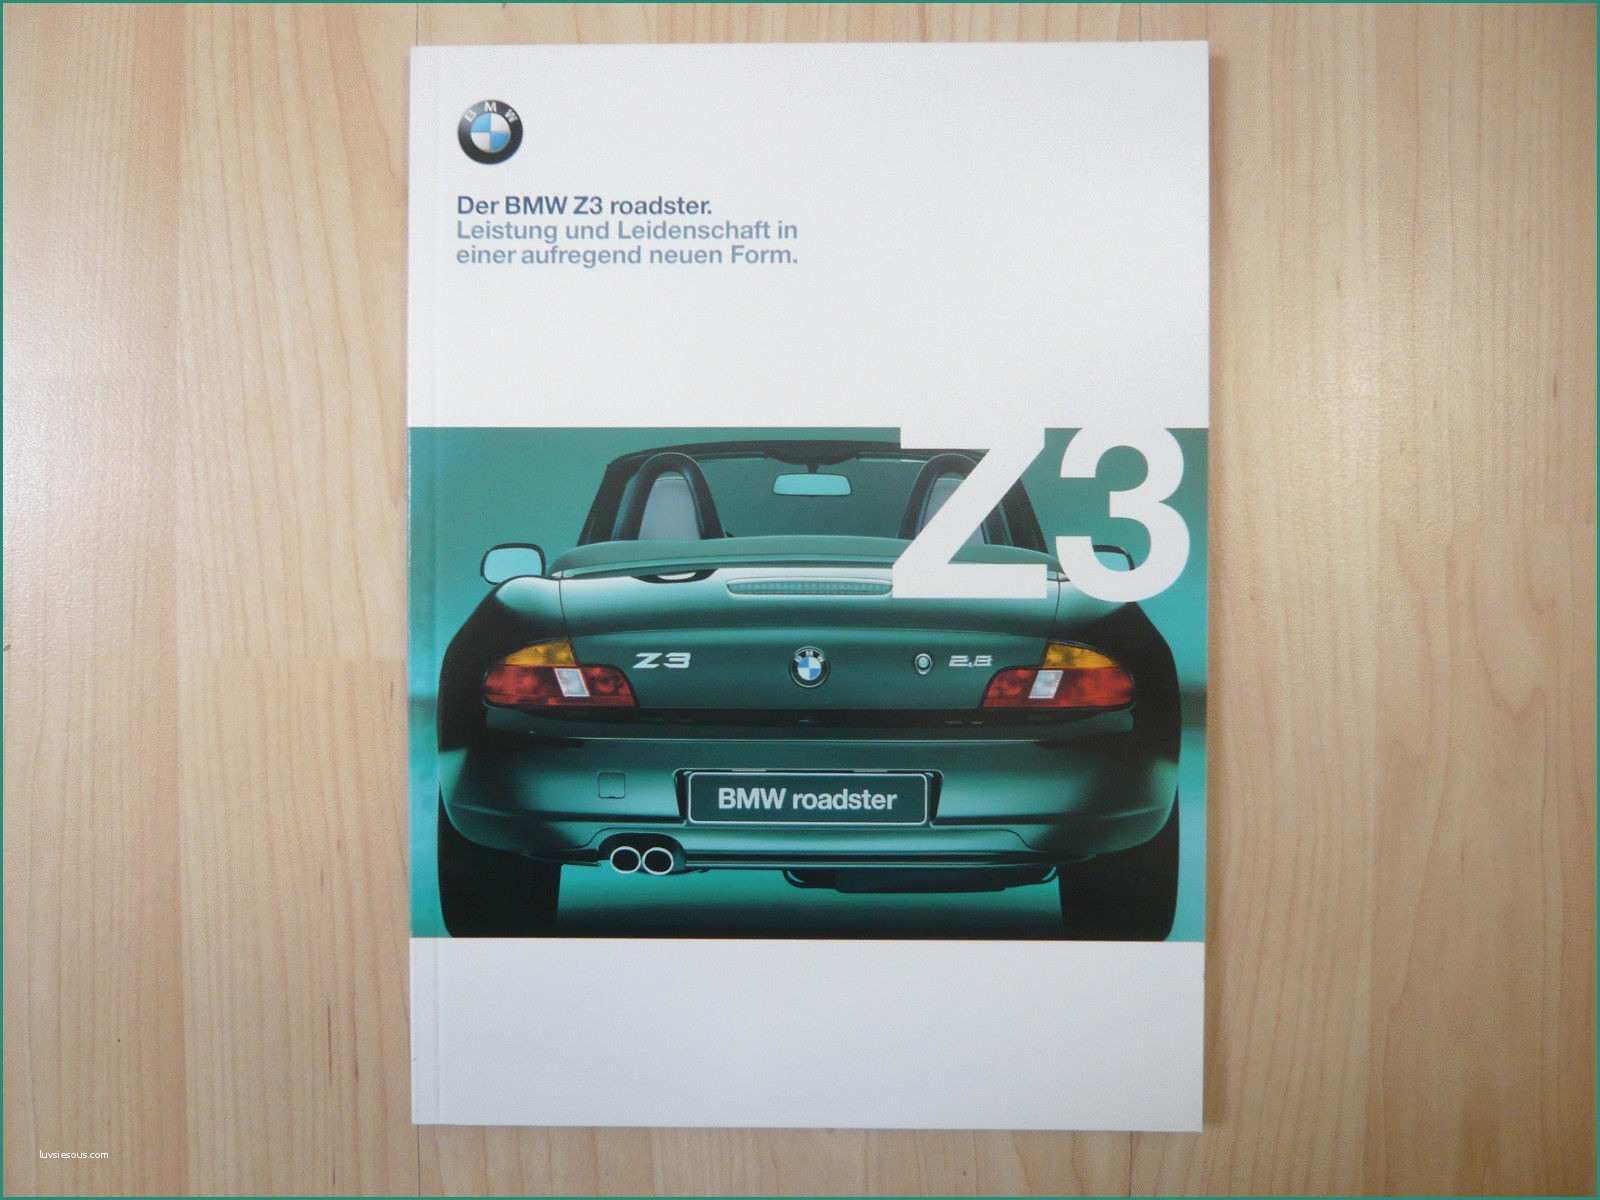 Poltrona Frau Catalogo E Prospekt Katalog Brochure Bmw Z3 Roadster 1 8 2 0 2 8 Und M